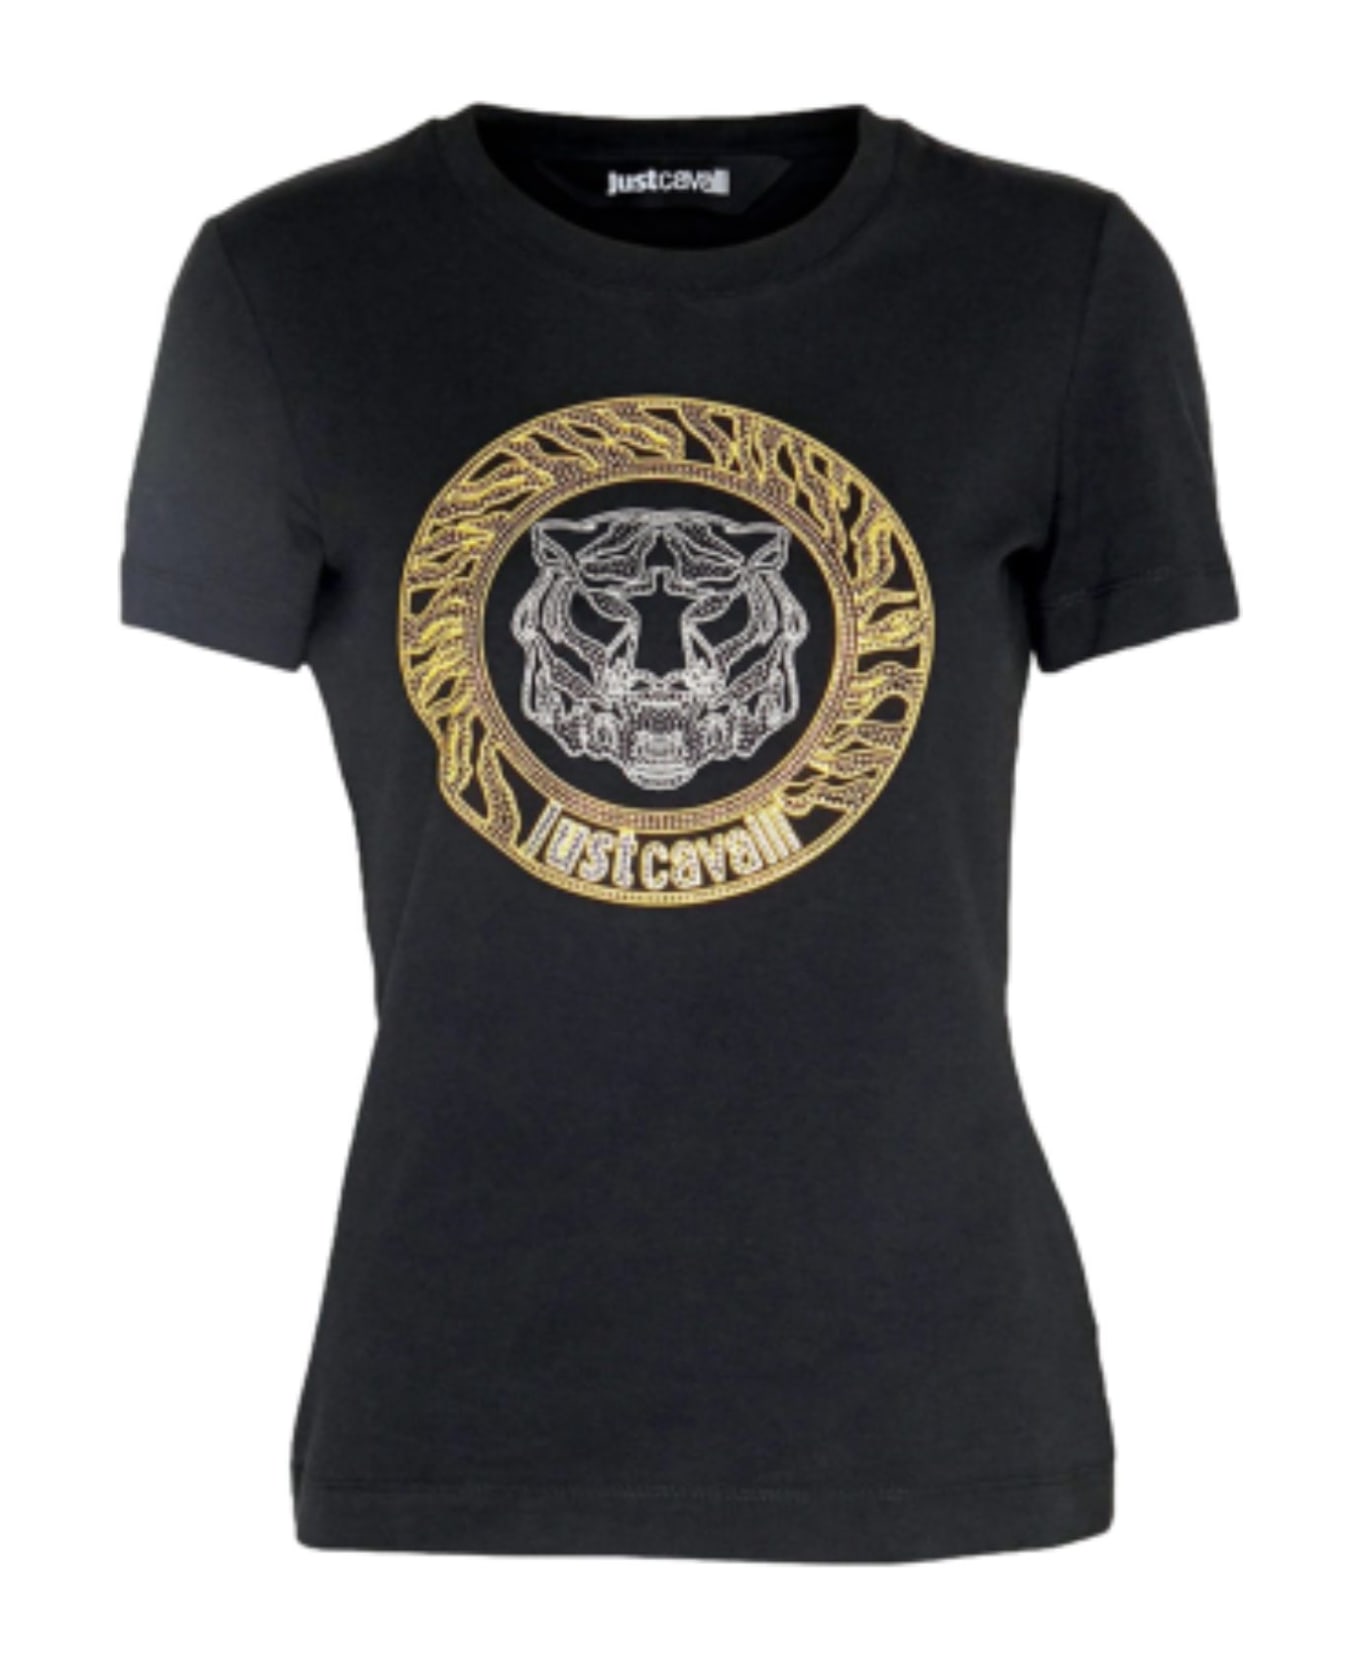 Just Cavalli Women's T-shirt - Black